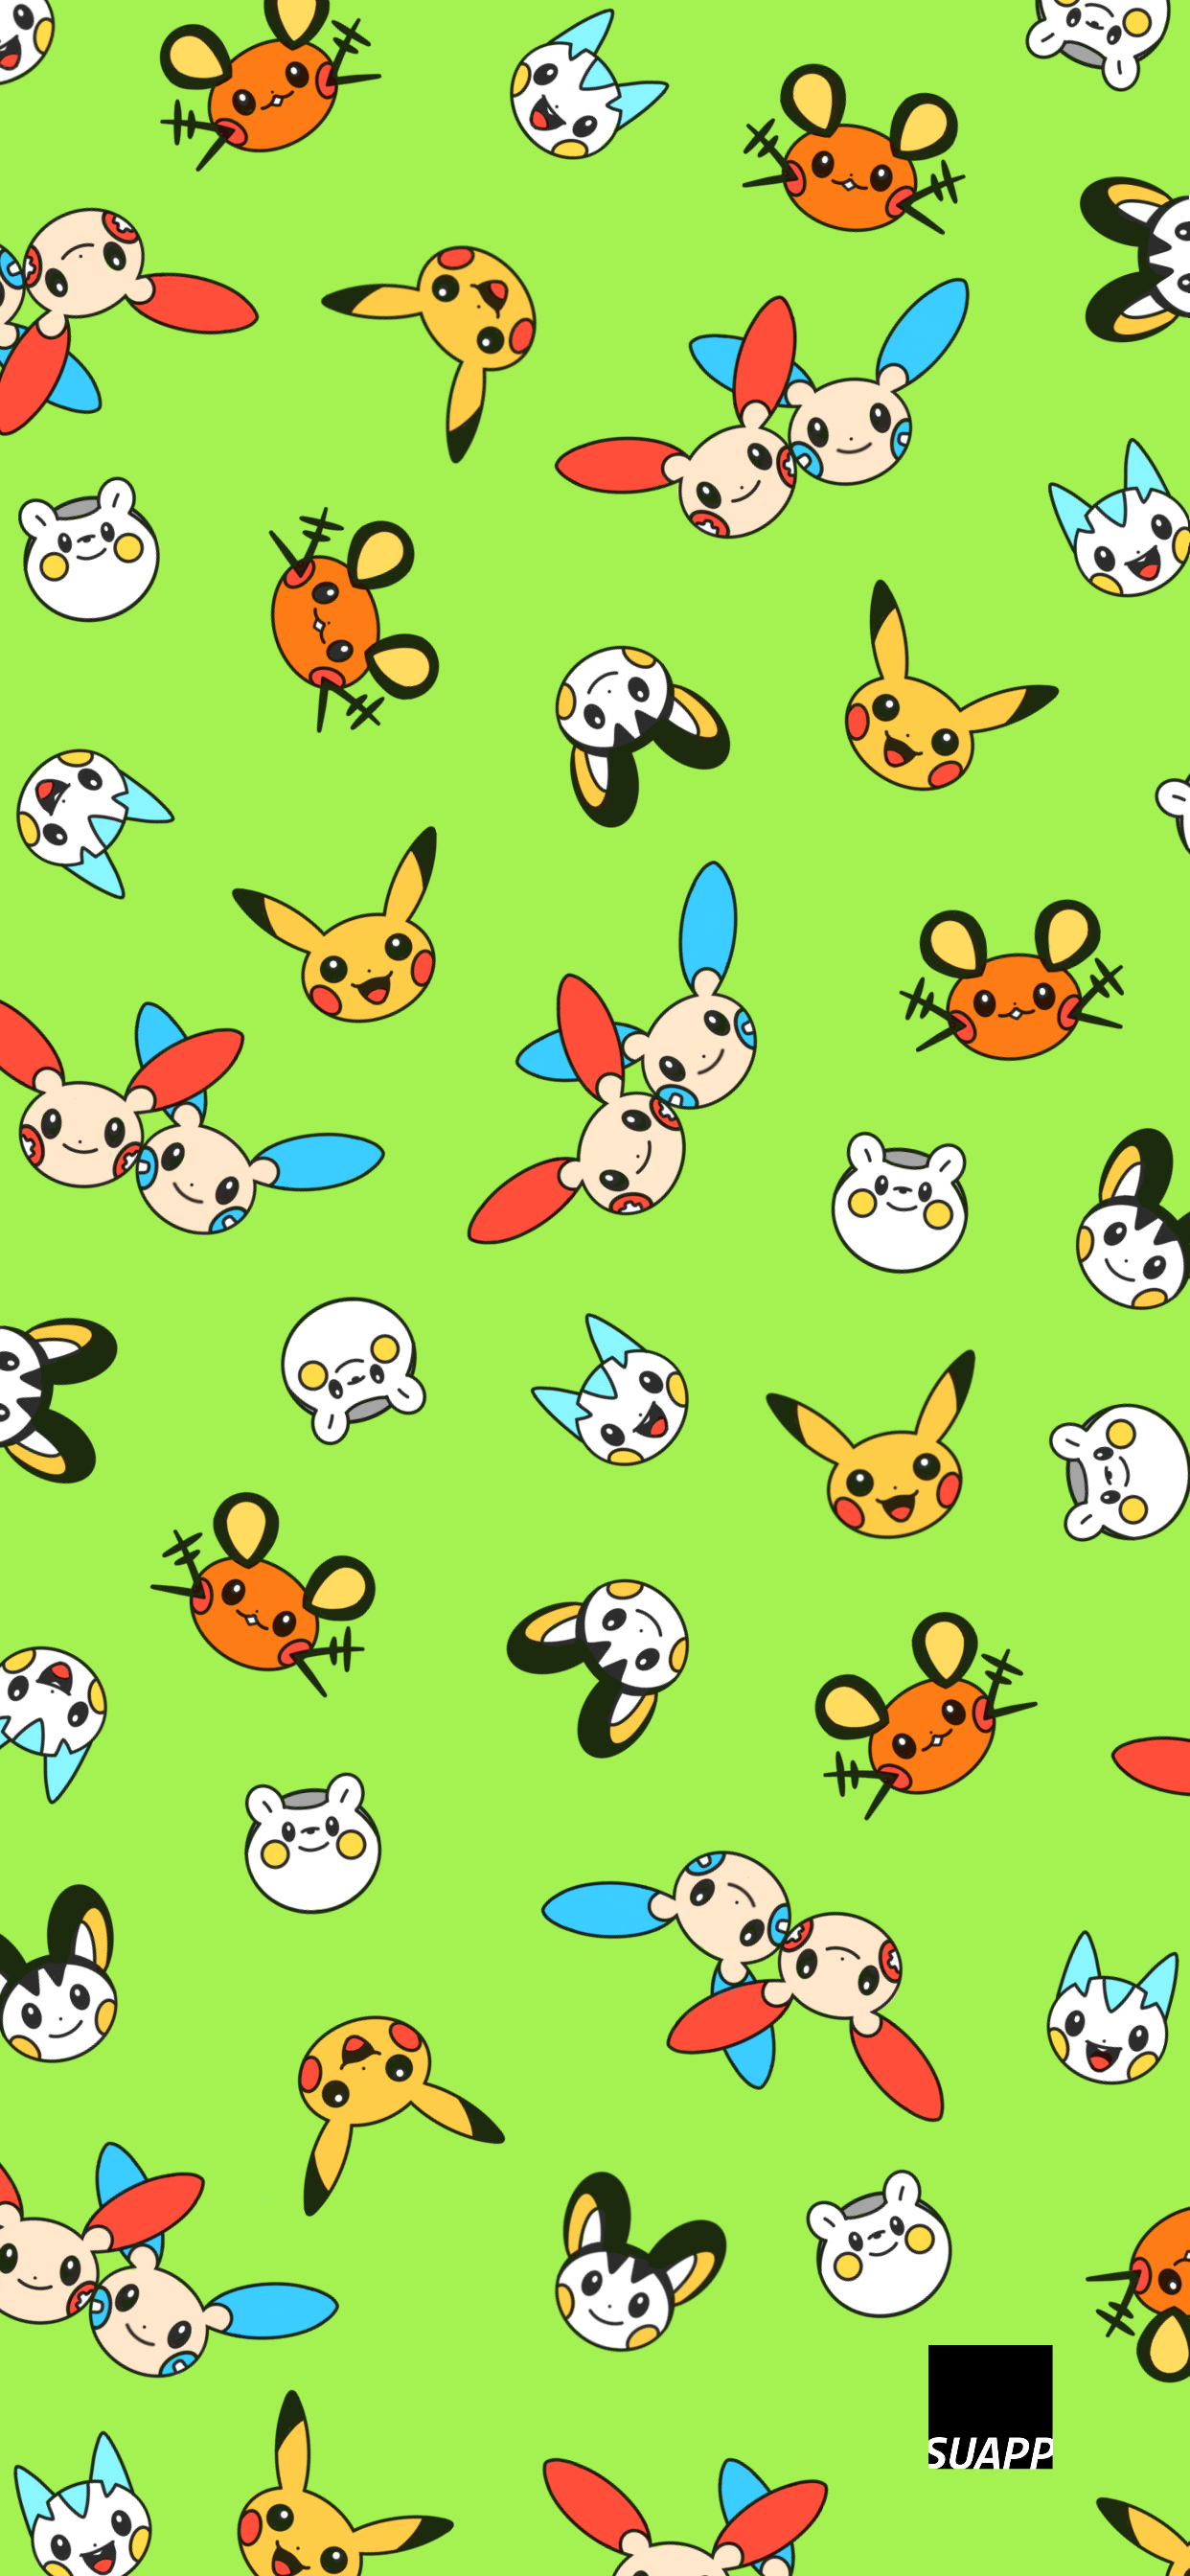 SUAPP: Electric Pokémon Wallpaper